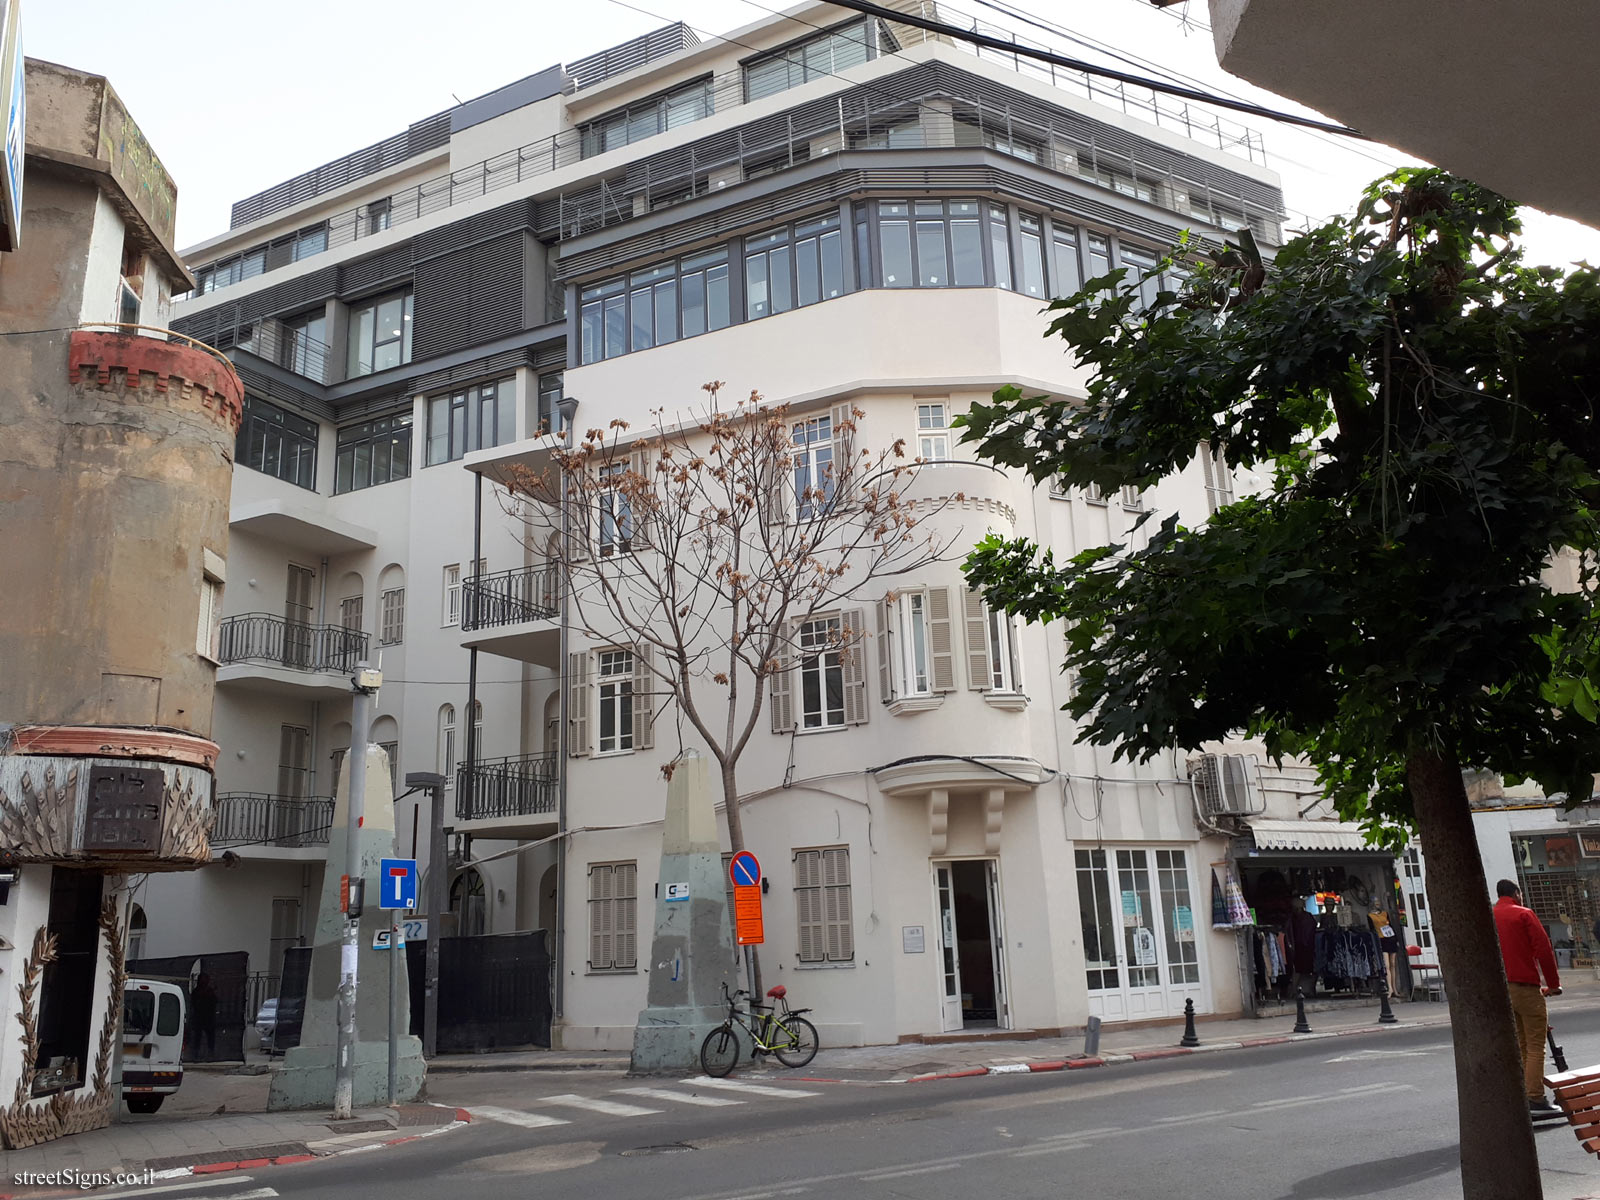 Tel Aviv - buildings for conservation - 2 Plonit Alley